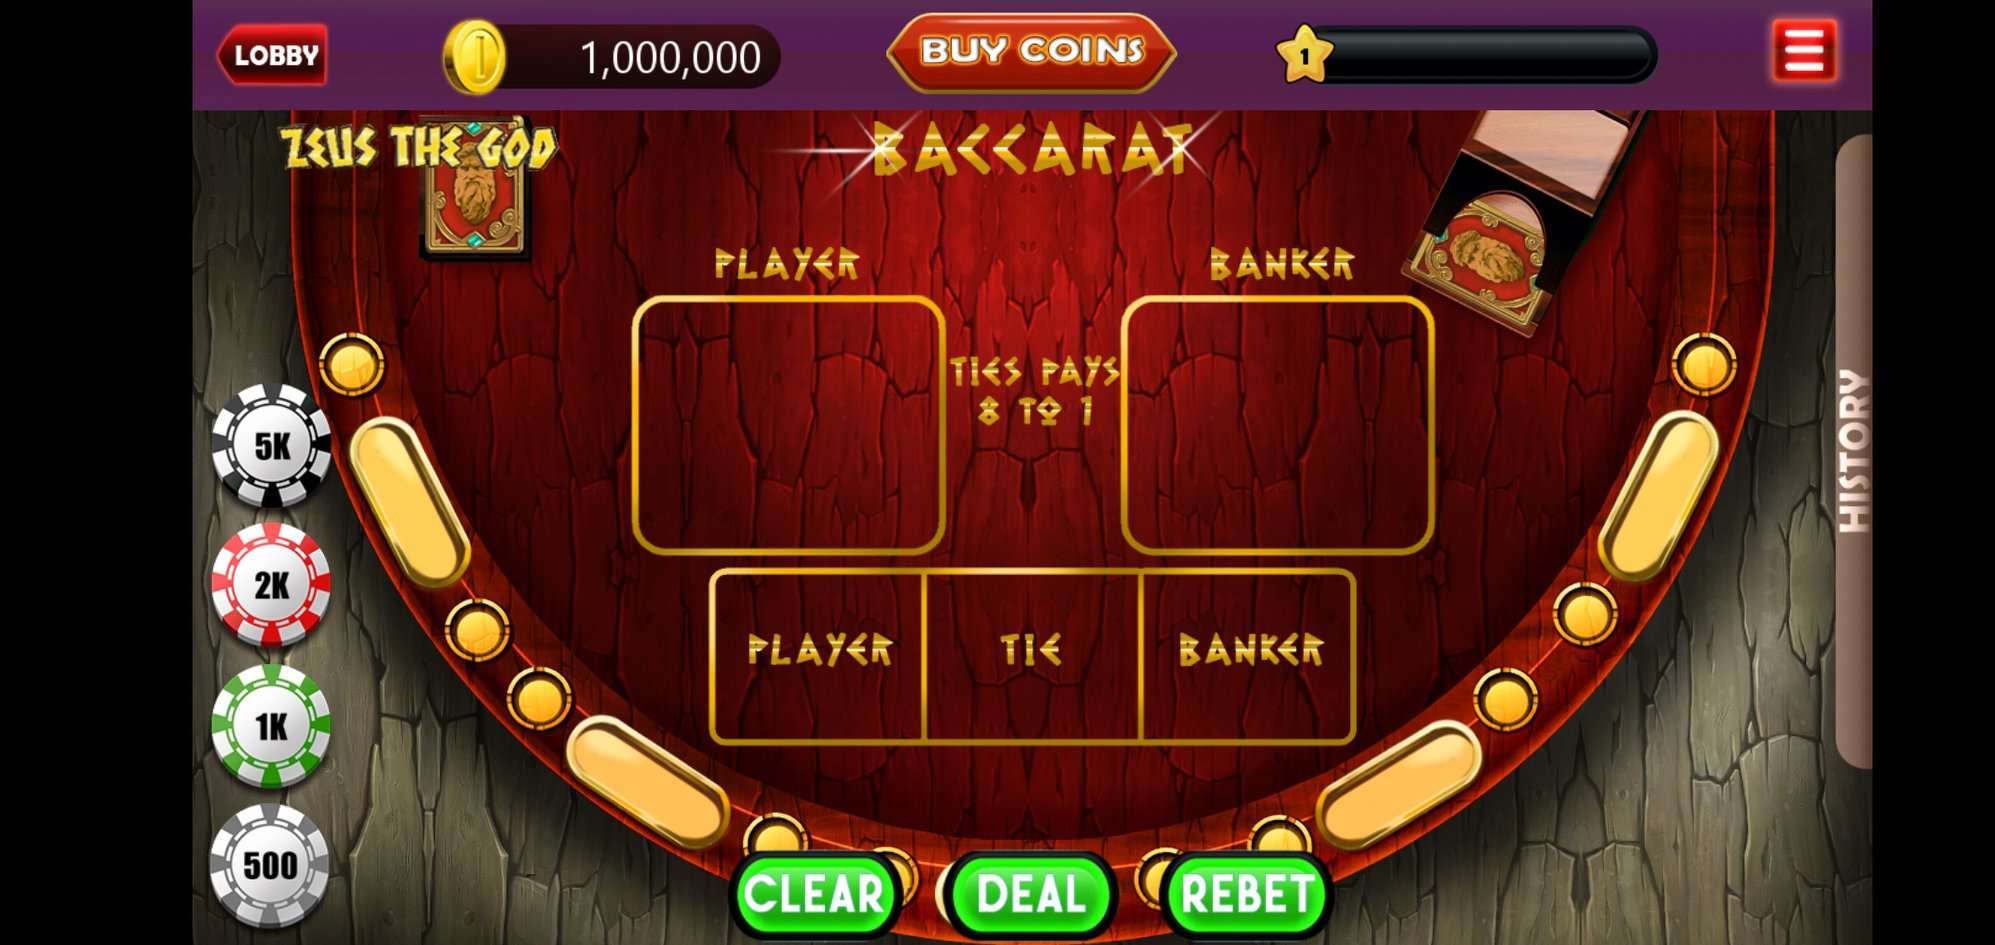 4 in 1 Slots, Blackjack, Roulette, Baccarat